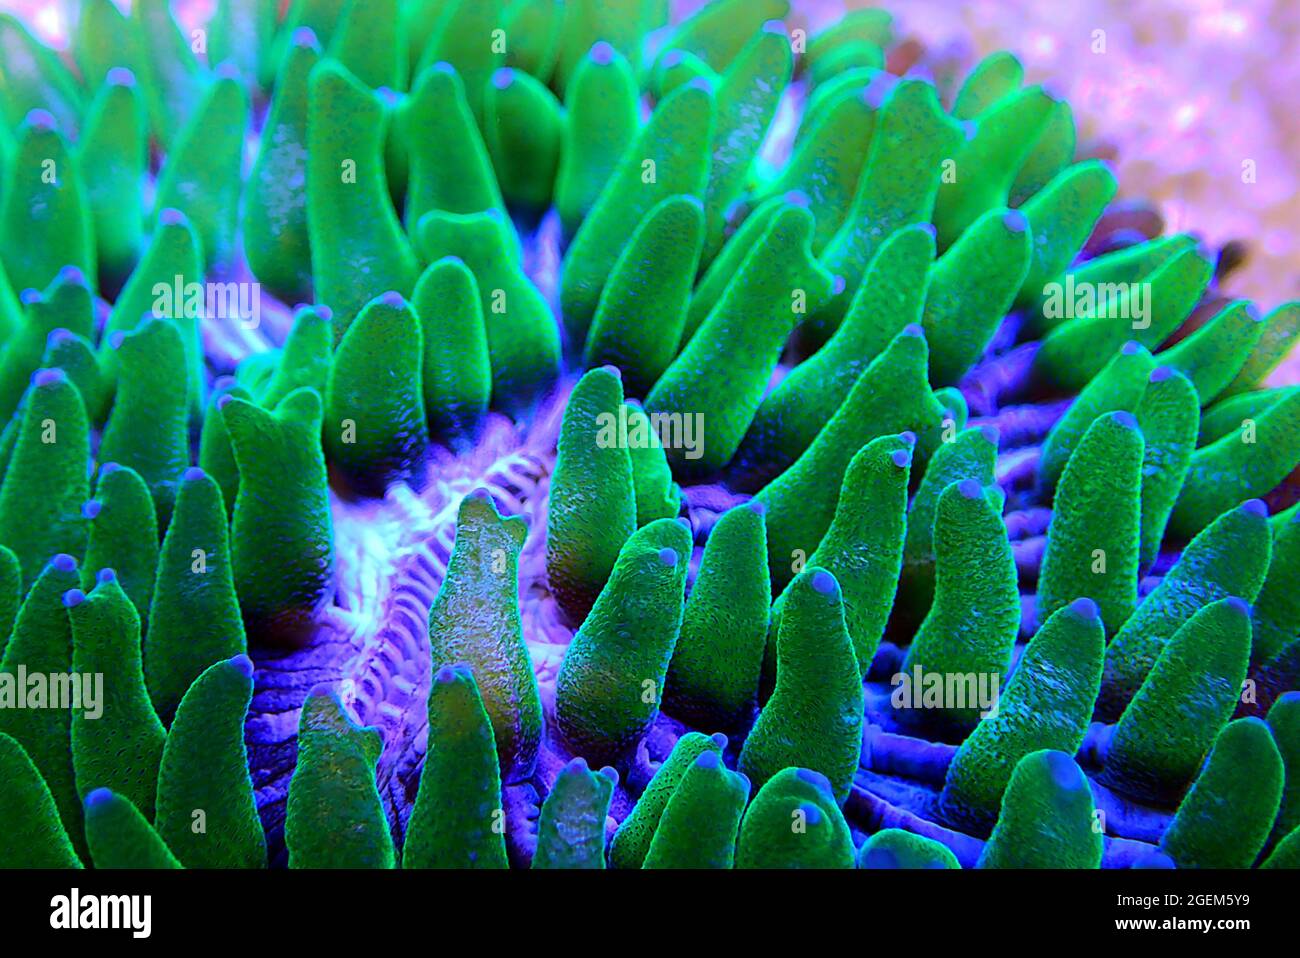 Fungia - Plate LPS coral macro photography in reef aquarium tank Stock Photo